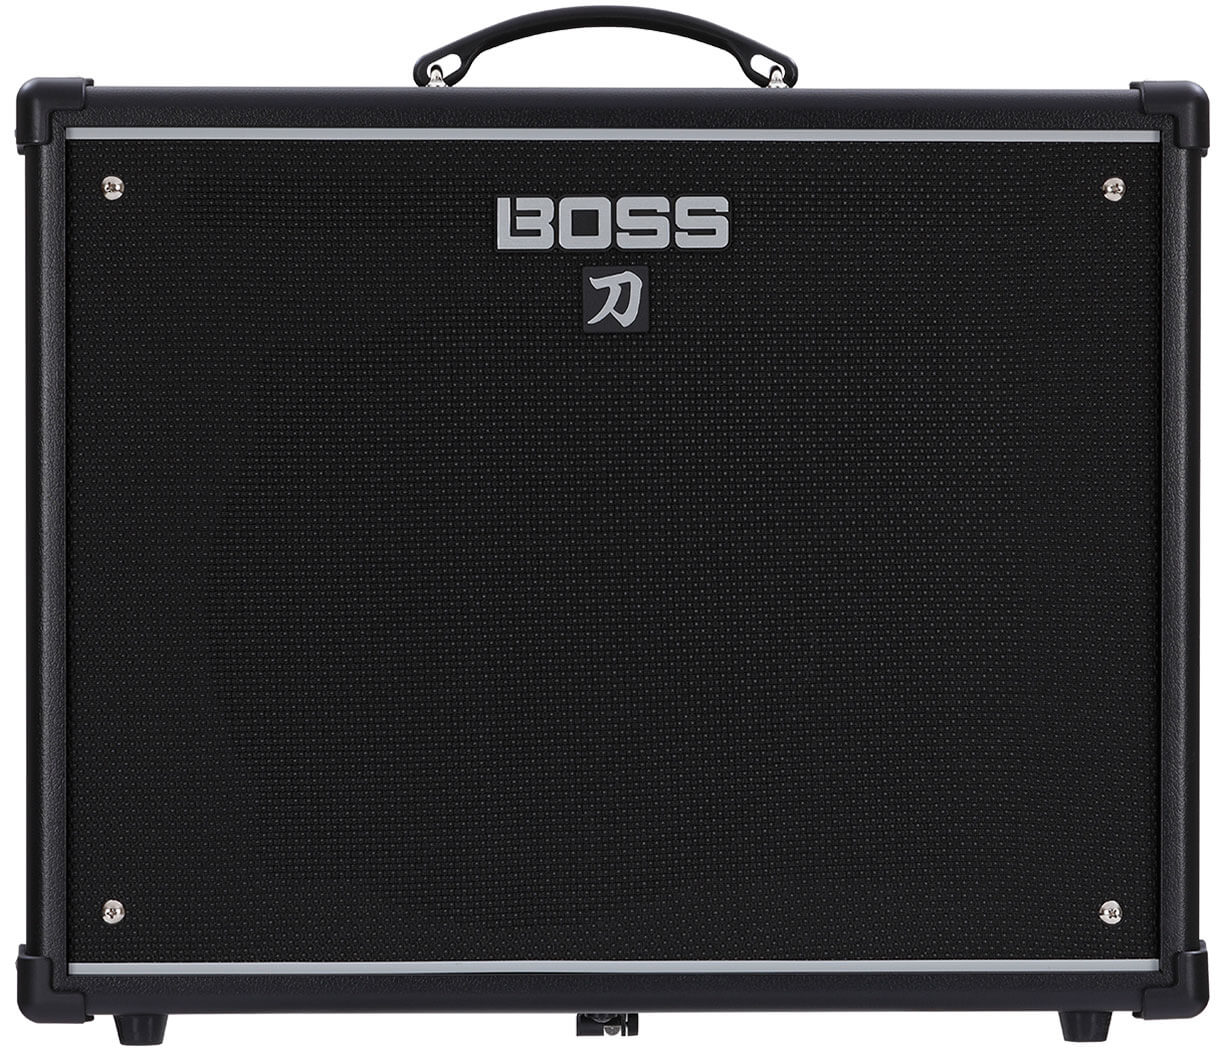 BOSS Katana-100 Guitar Amplifier Review